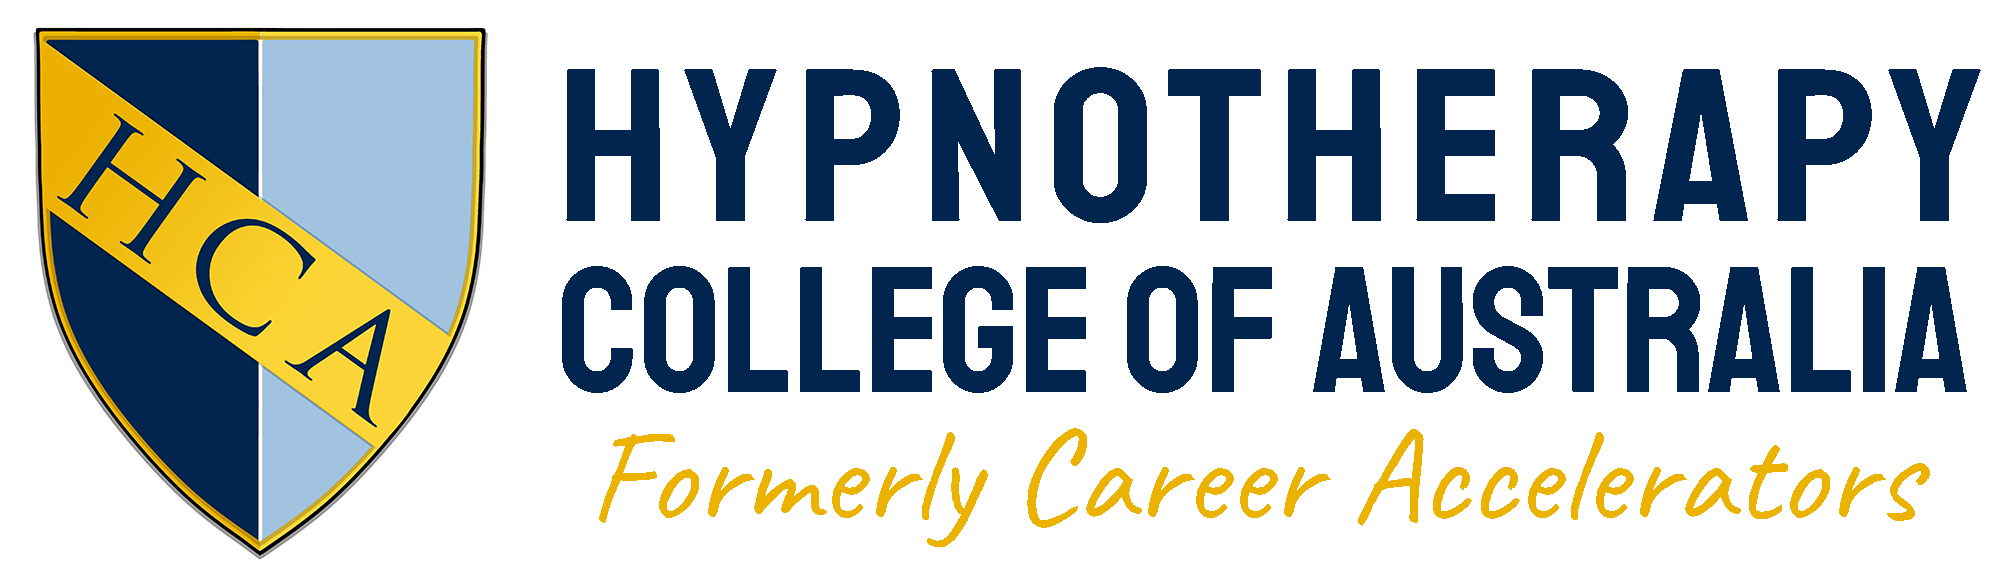 Hypnotherapy College of Australia Logo